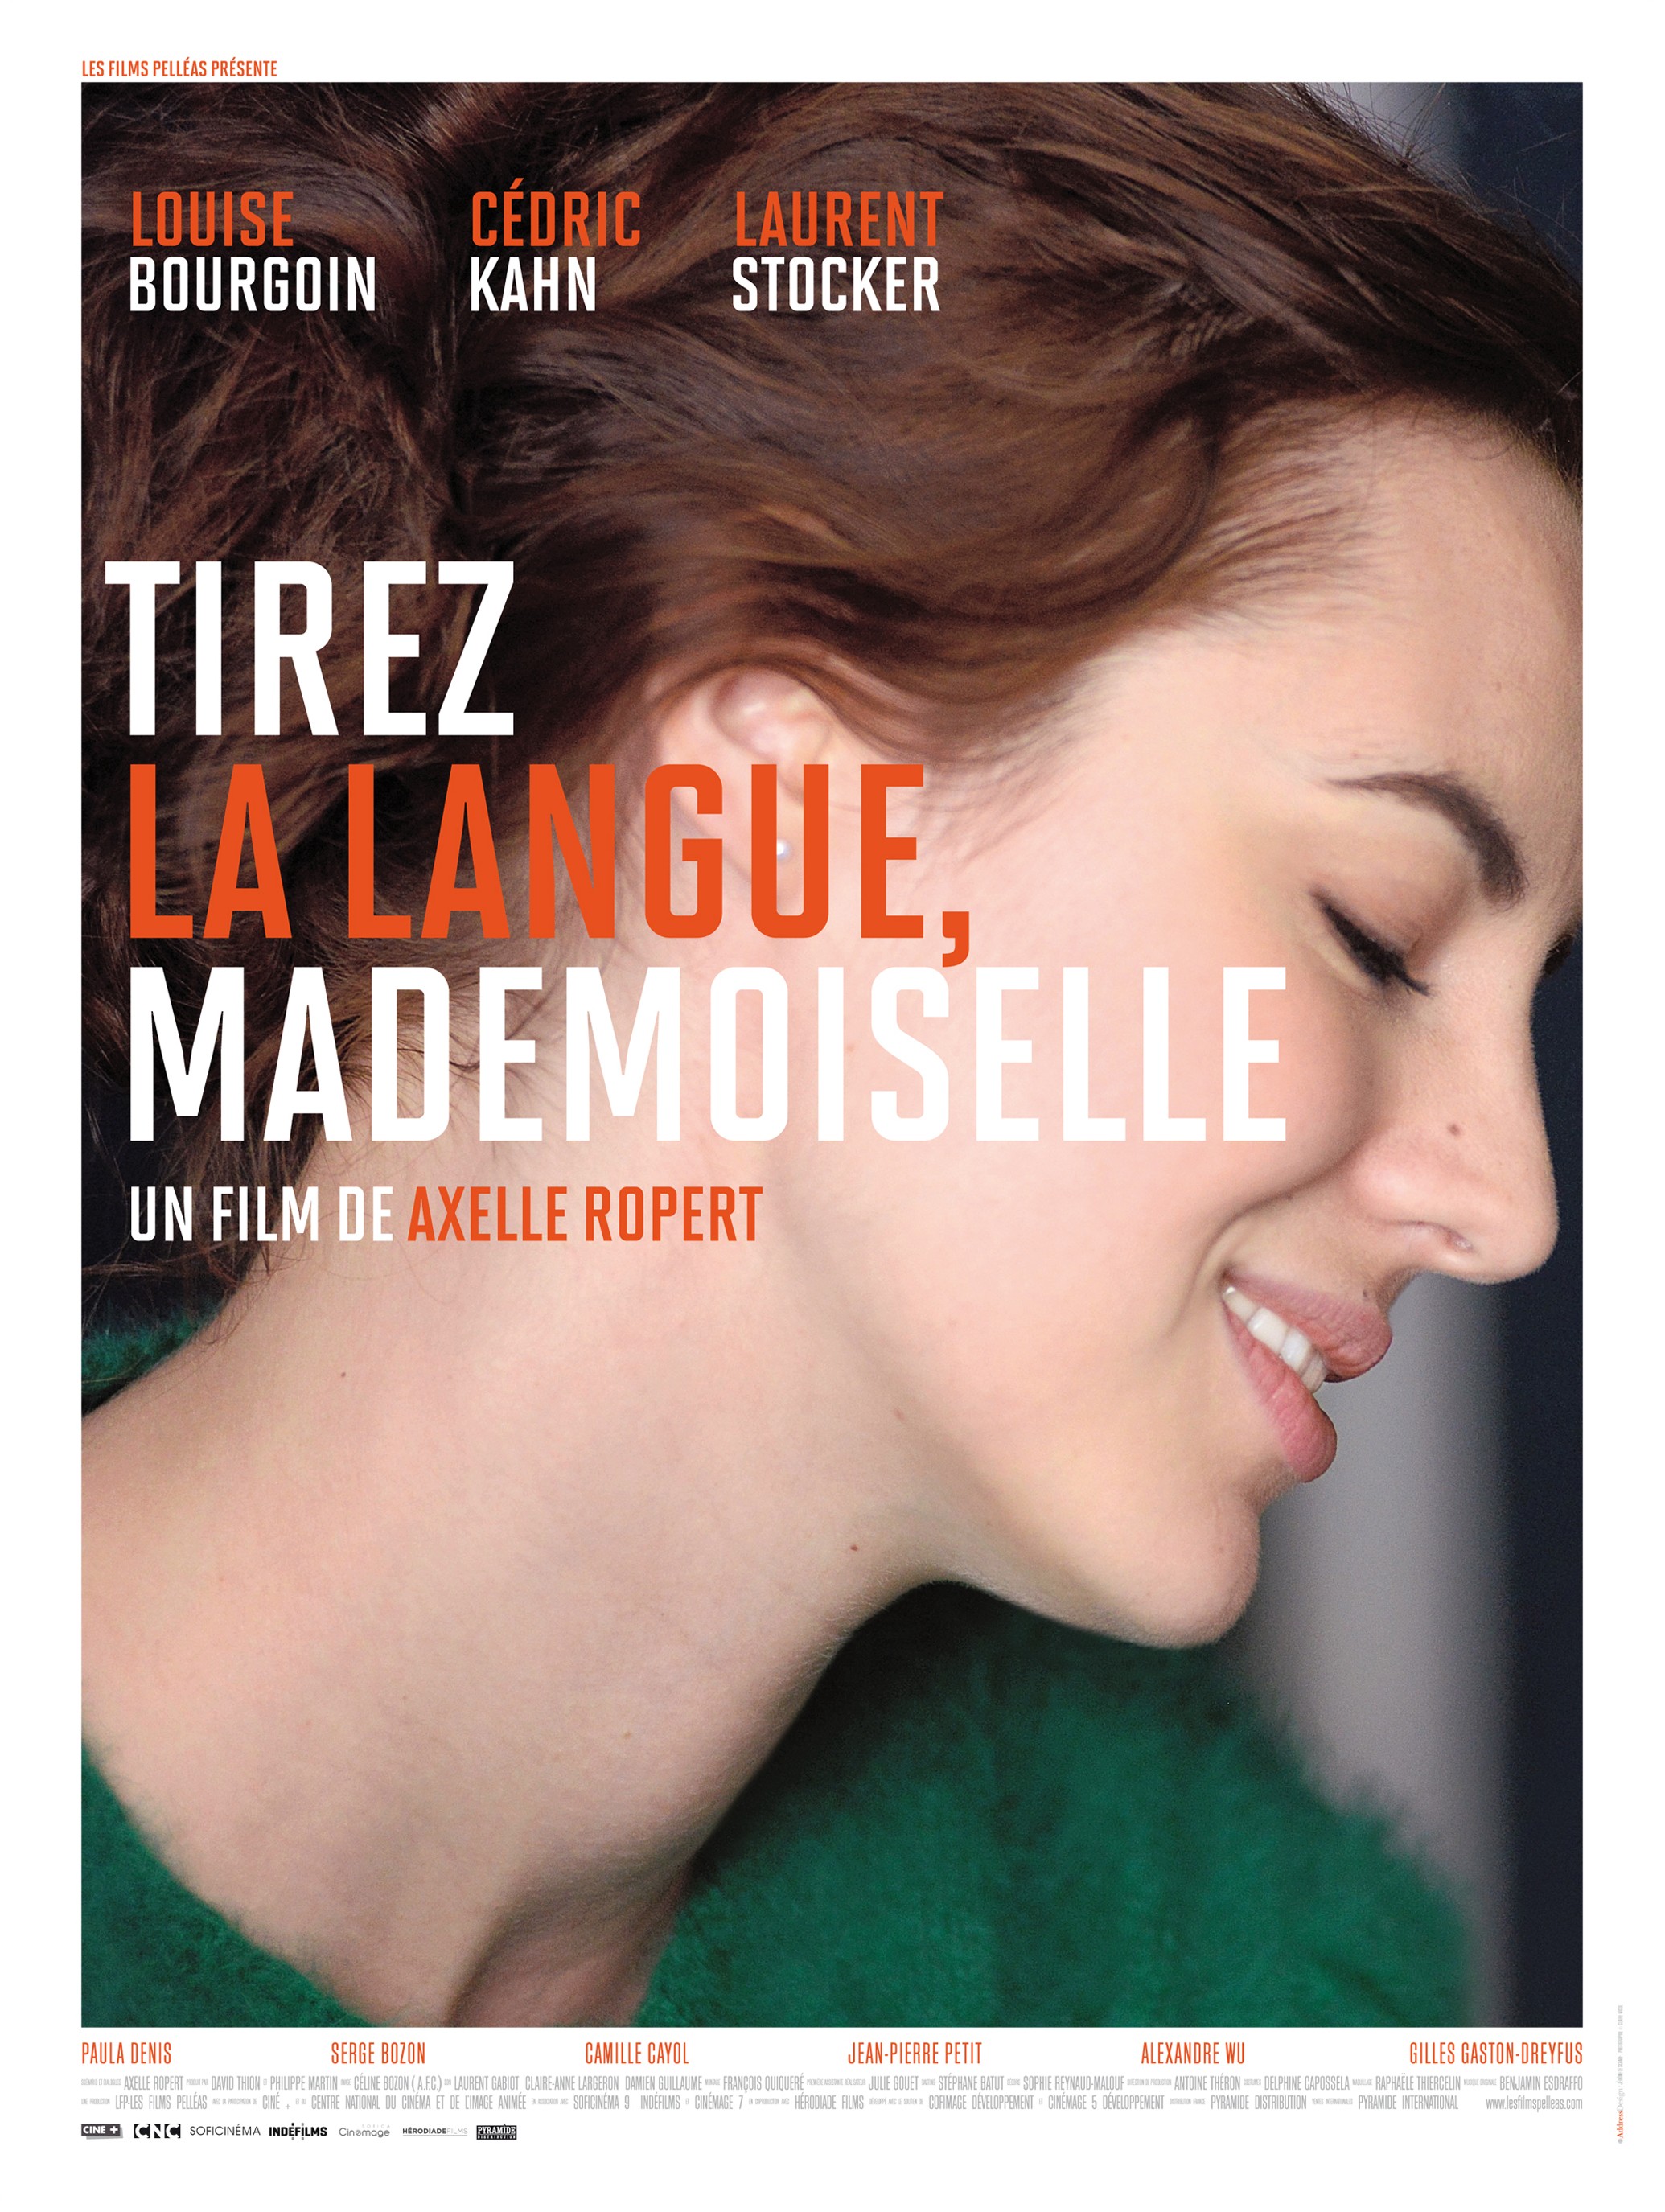 Mega Sized Movie Poster Image for Tirez la langue, mademoiselle 